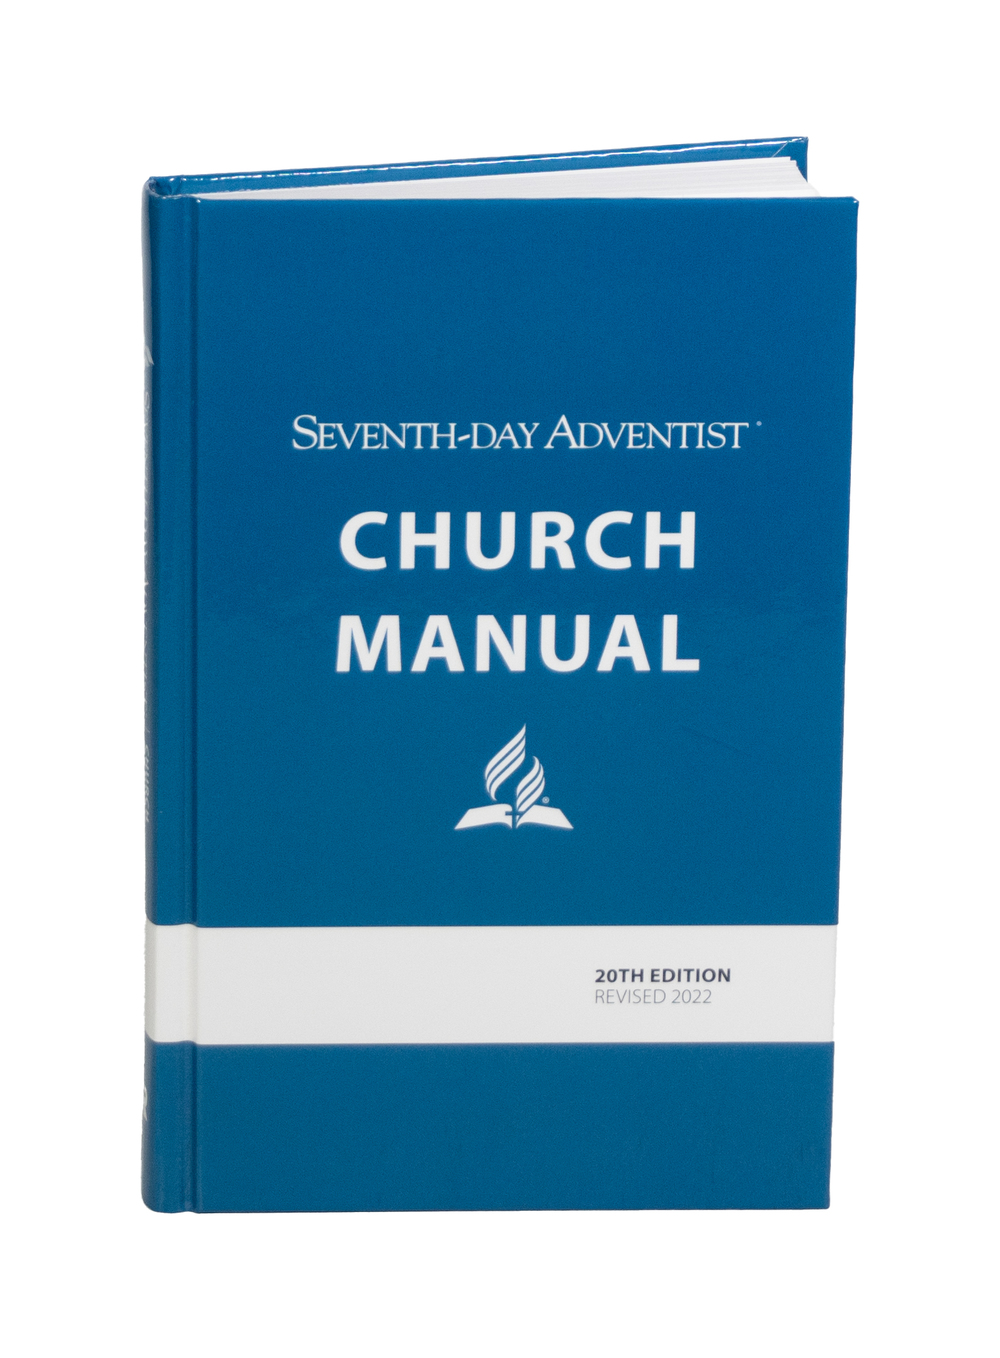 Seventh-day Adventist Church Manual | Hardback Revised 2022